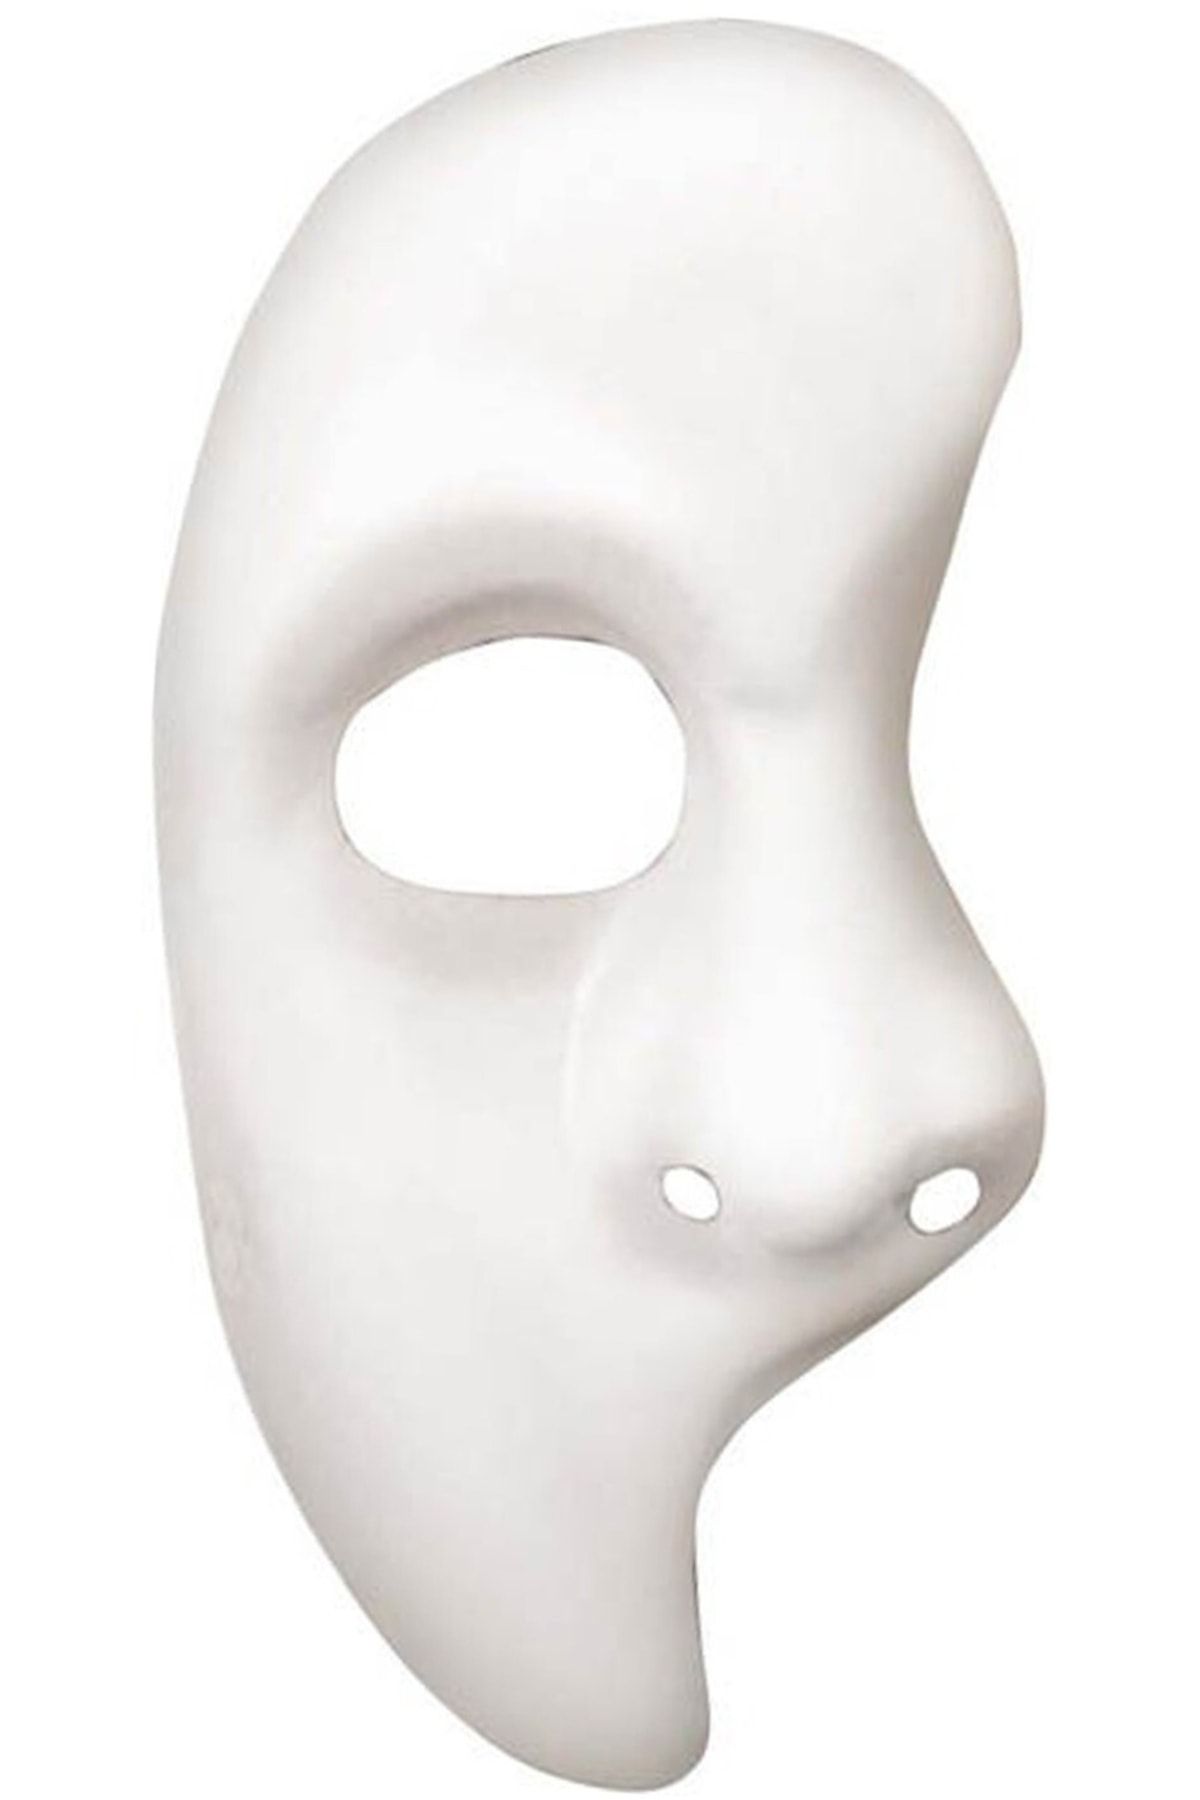 YTSHOP Phantom Yarım Yüz Opera Maske .